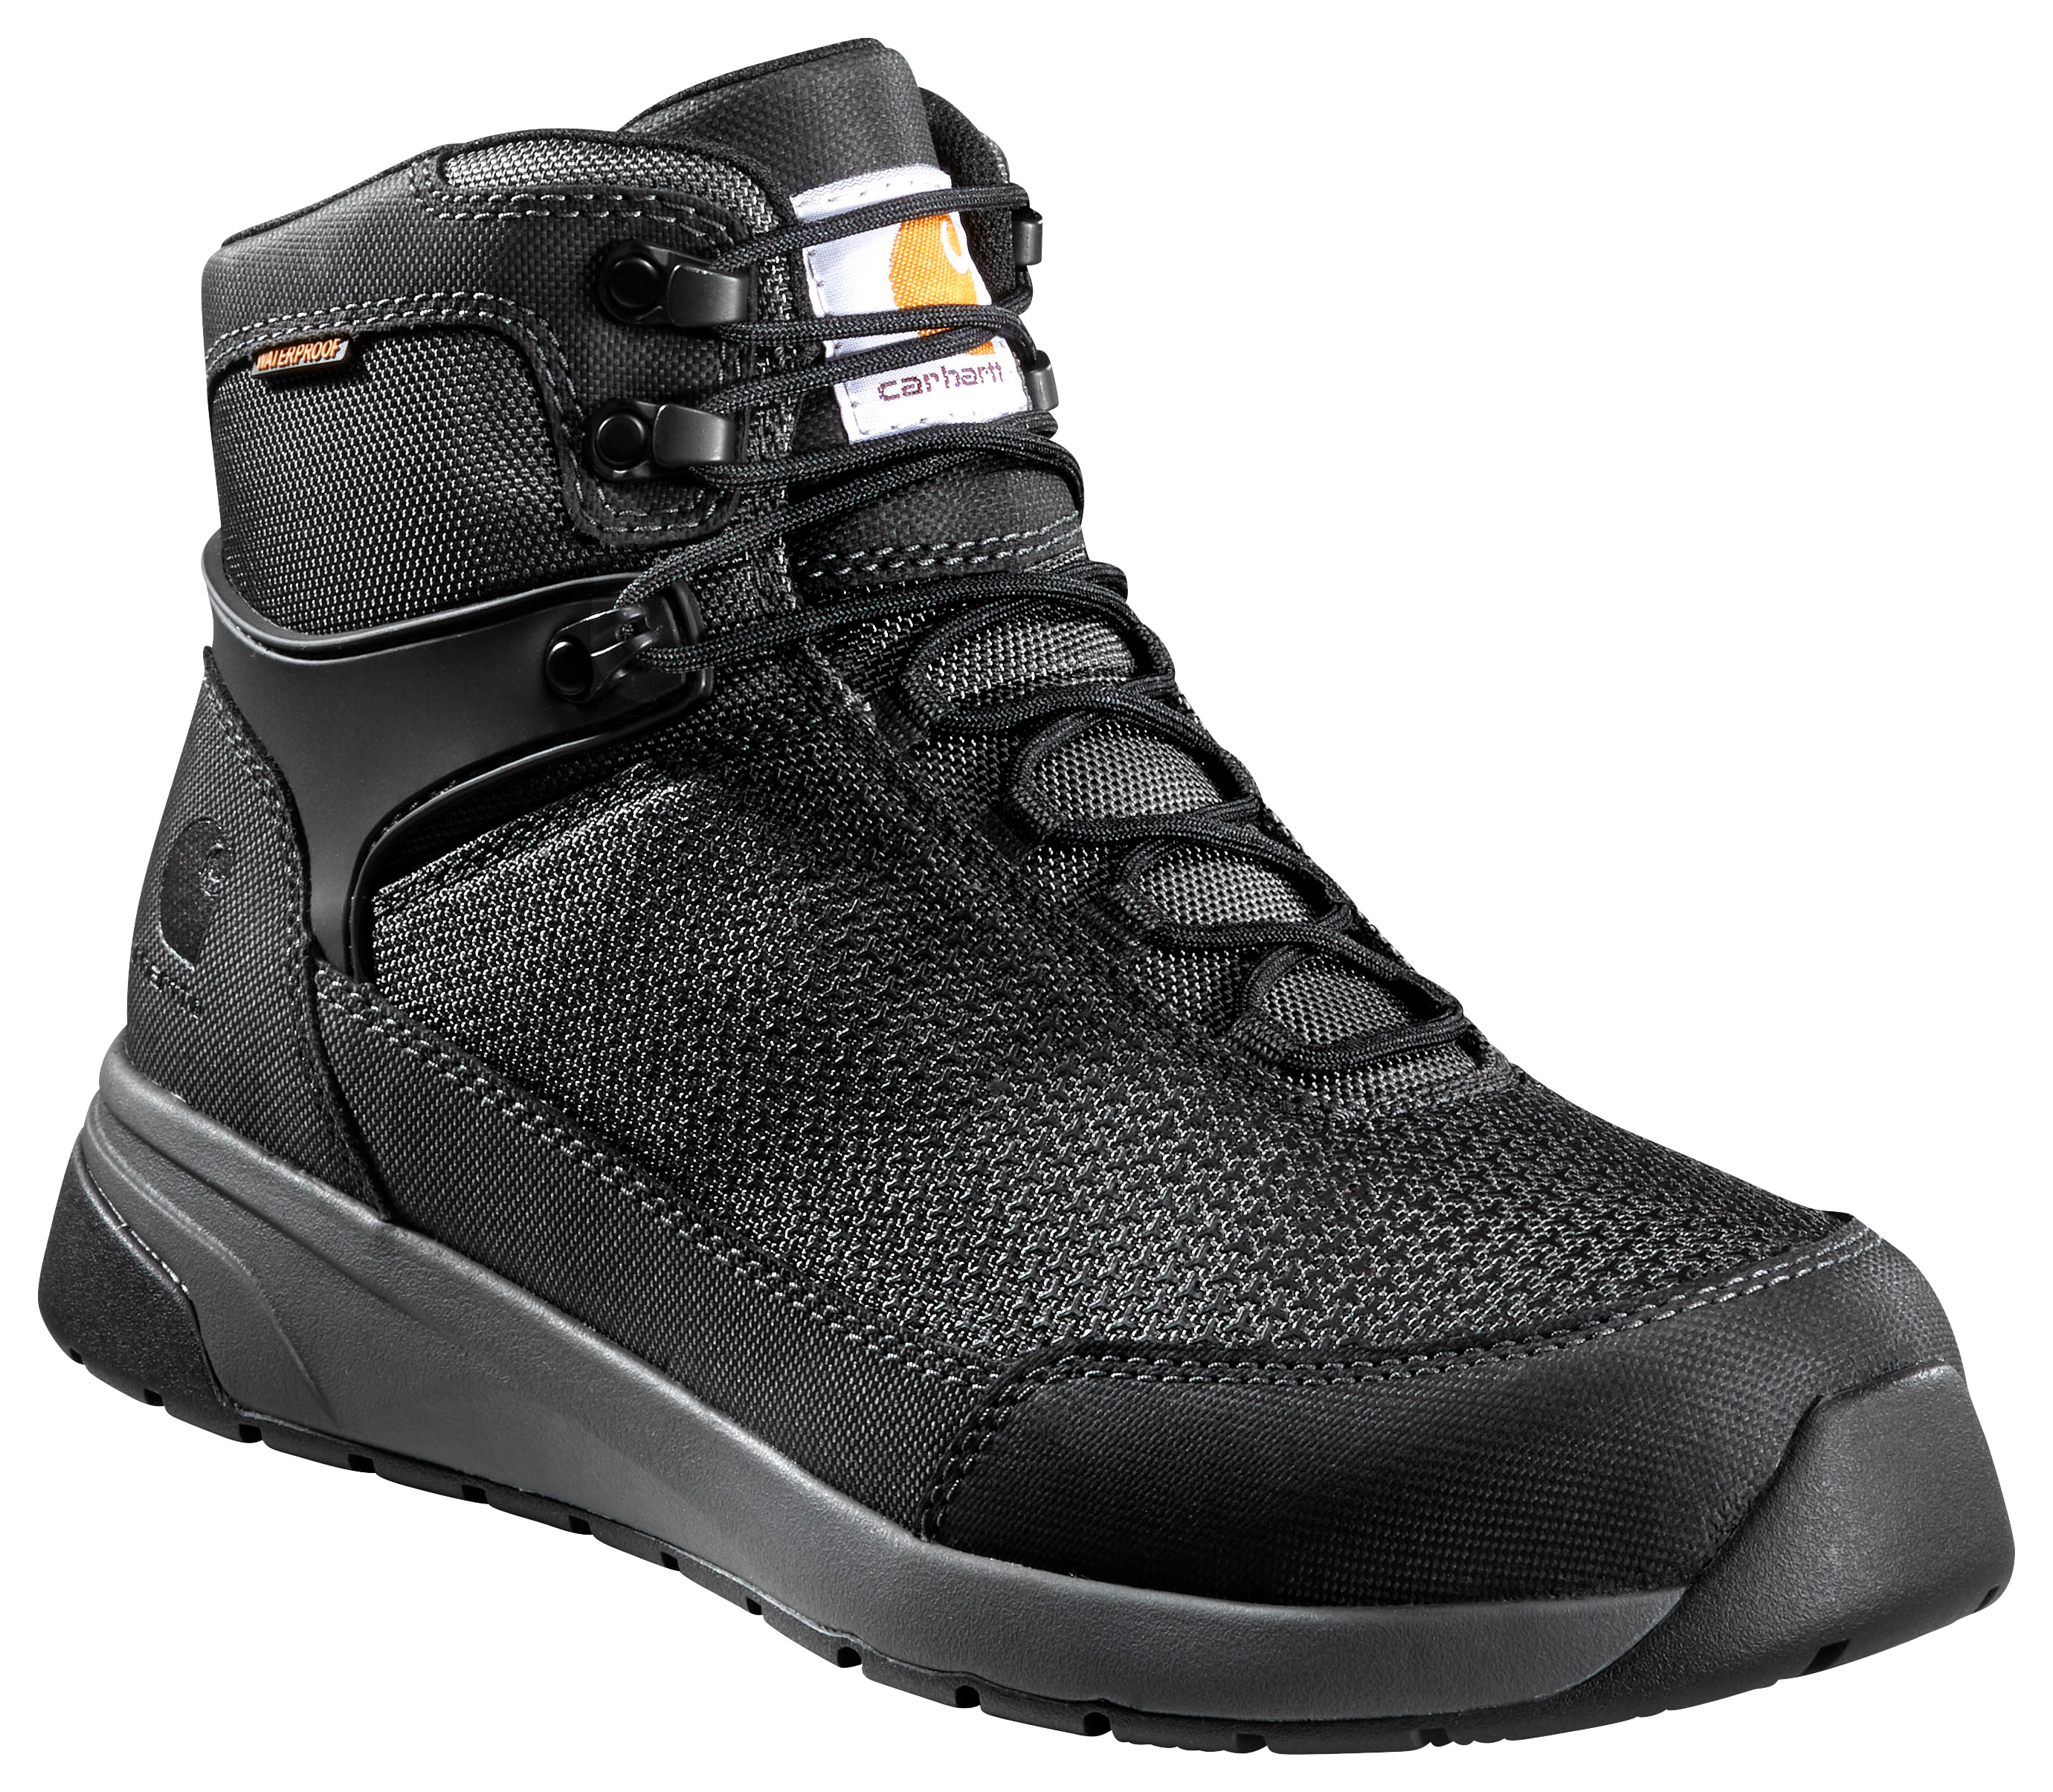 Carhartt Force 6"" Nano Composite-Toe Work Boots for Men - Black - 9.5W